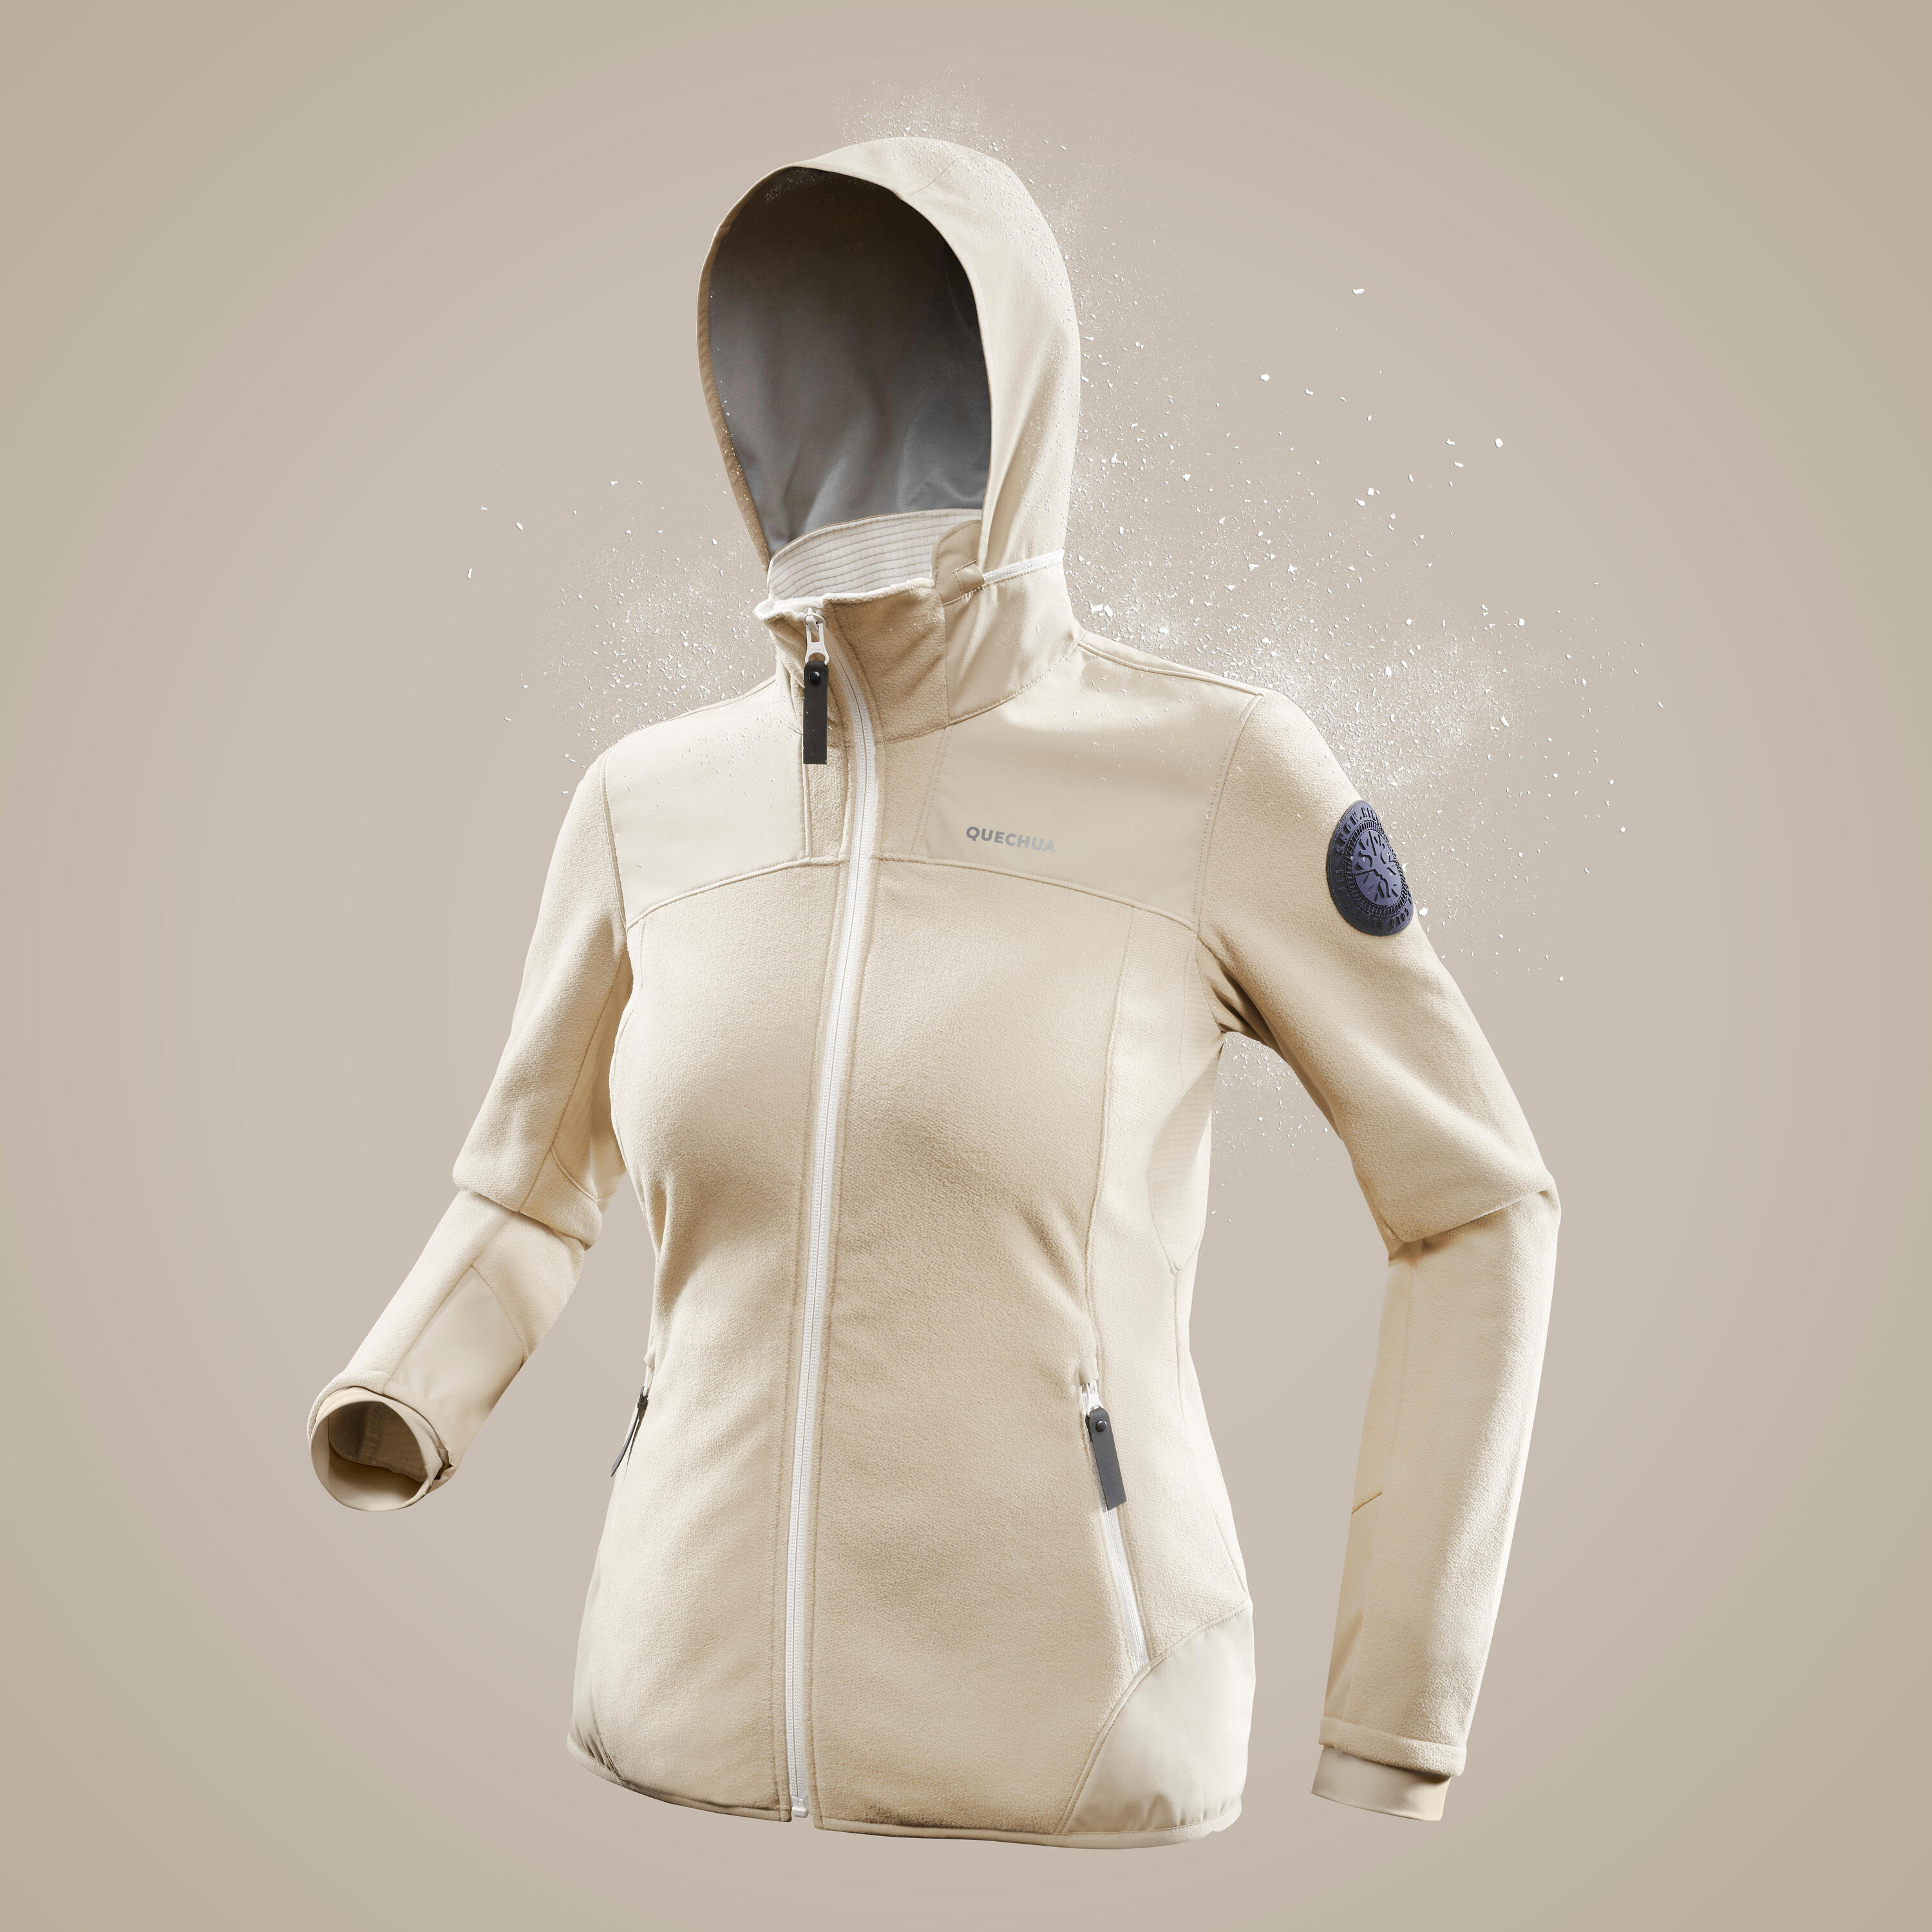 Decathlon SH500 Jacket for Women Review